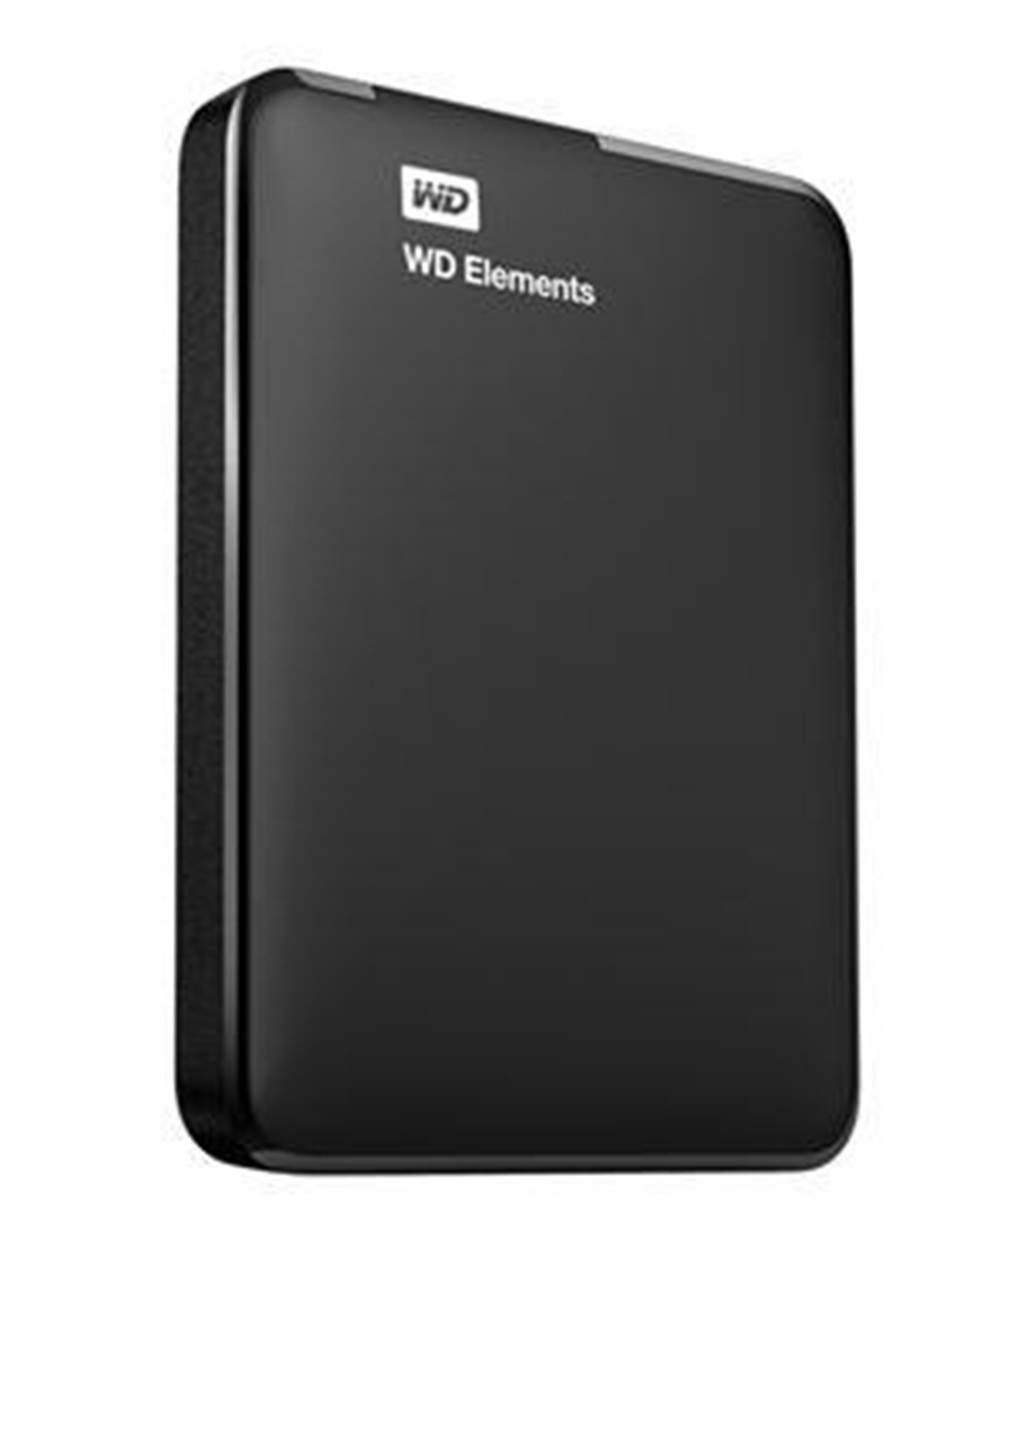 Внешний жесткий диск Elements 1TB WDBUZG0010BBK-WESN 2.5 USB 3.0 External Black Western Digital внешний жесткий диск western digital elements 1tb wdbuzg0010bbk-wesn 2.5 usb 3.0 external black (131032199)